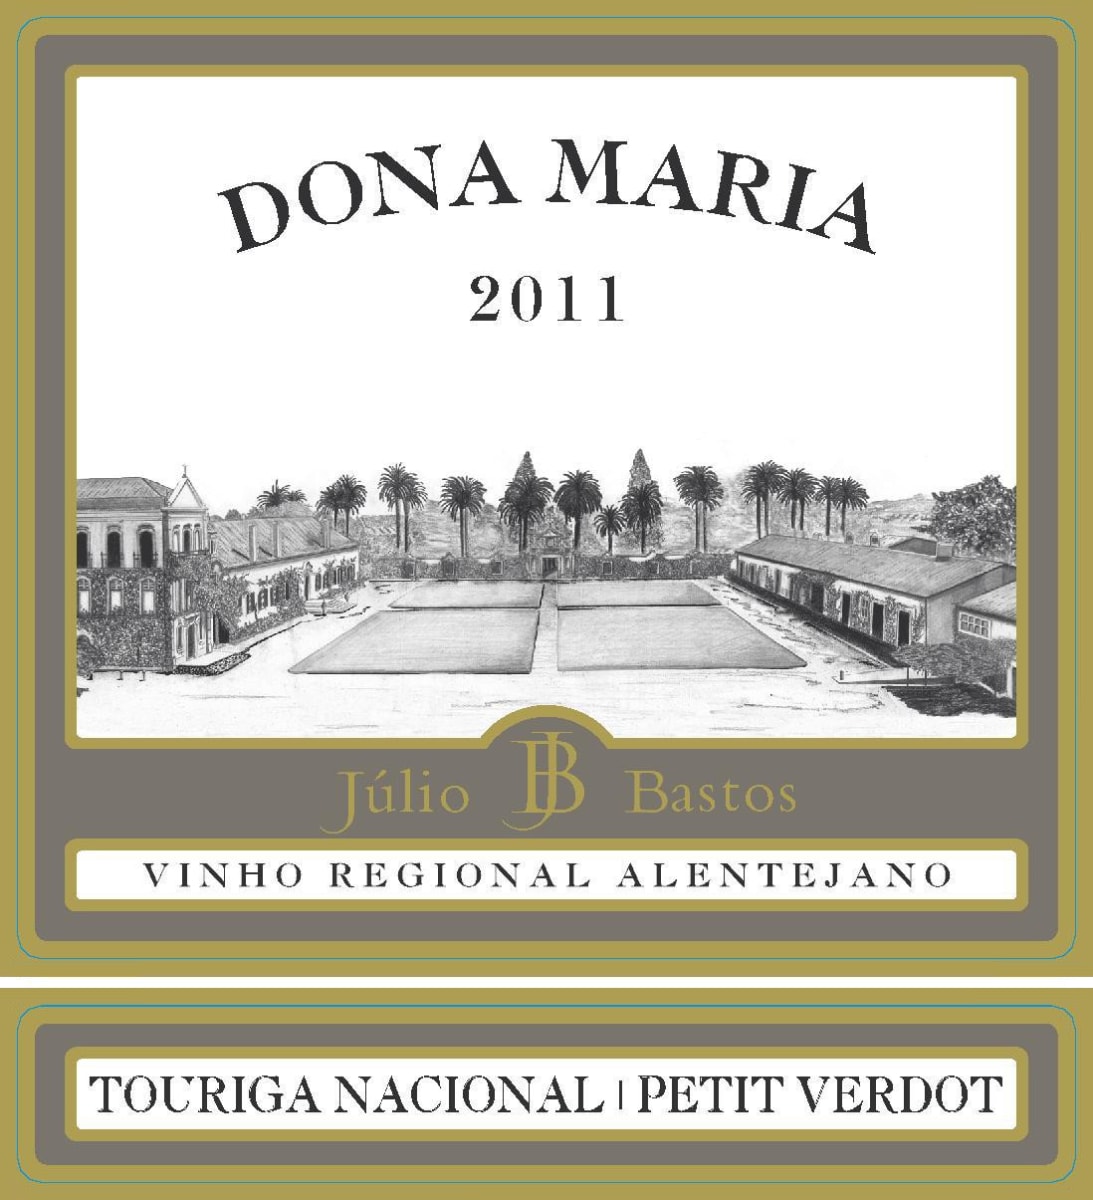 Dona Maria Vinho Regional Alentejano Touriga Nacional Petit Verdot 2011 Front Label